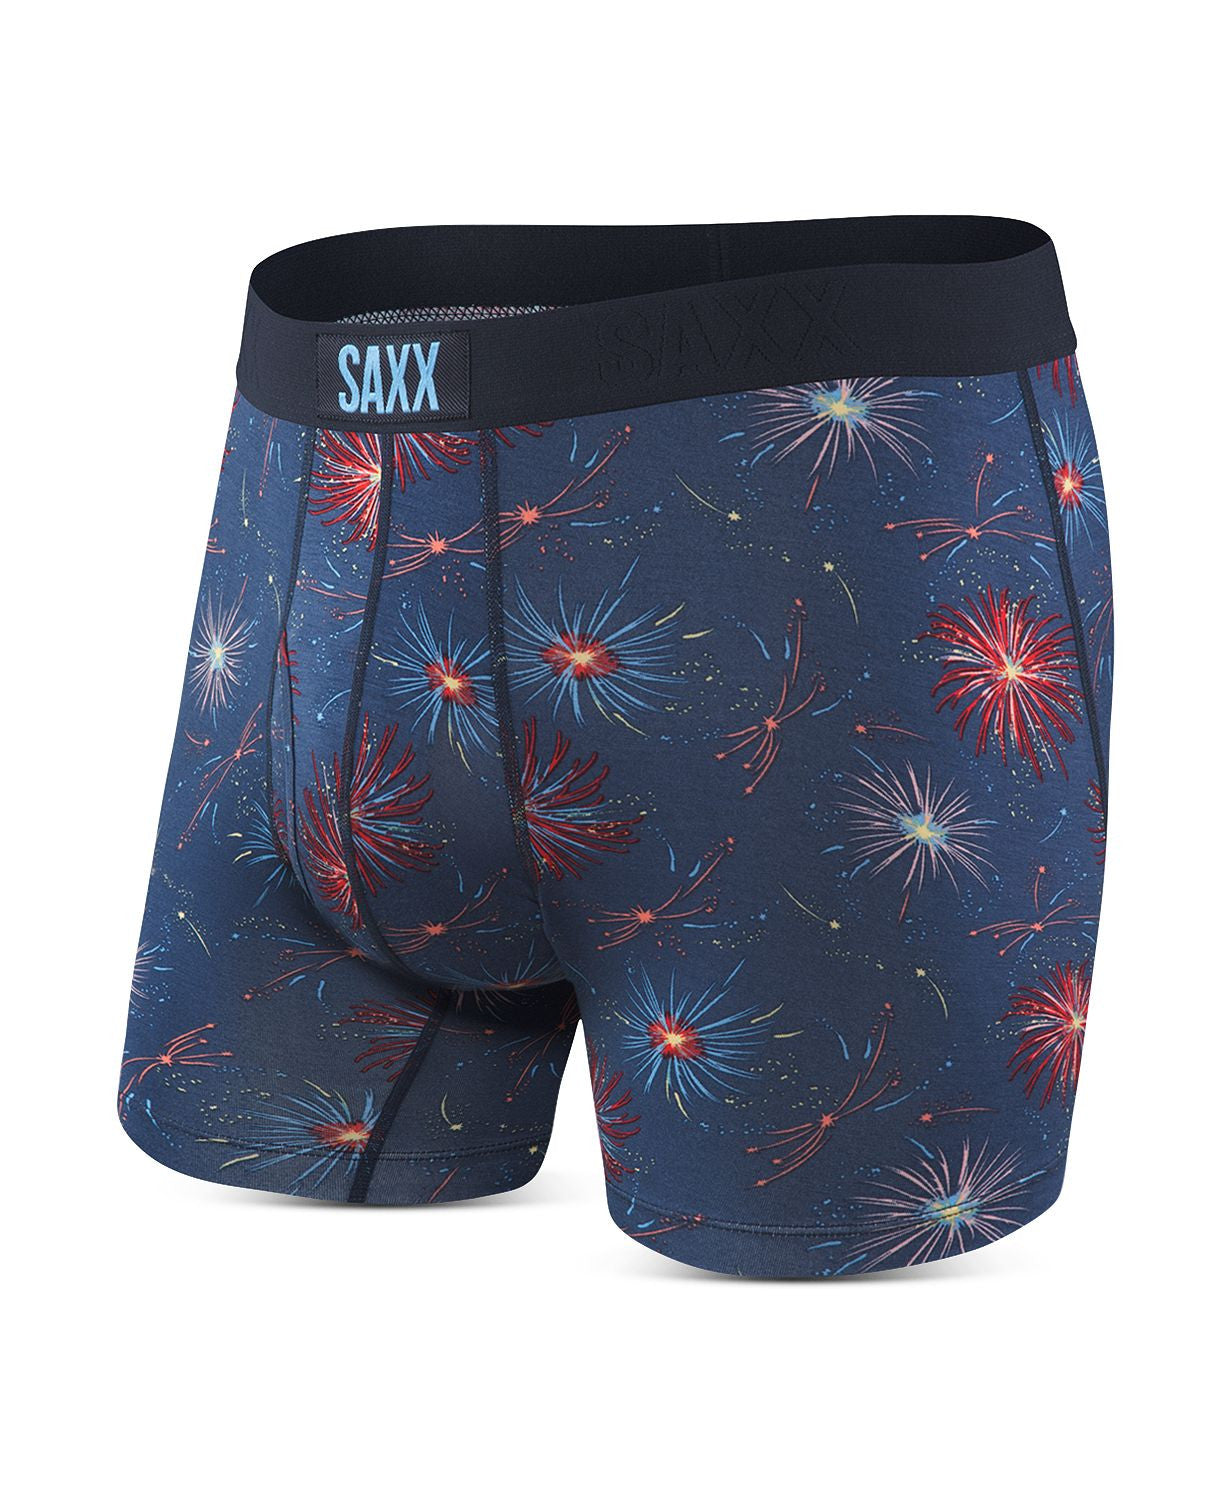 Saxx Ultra Fireworks Boxer Briefs Navy